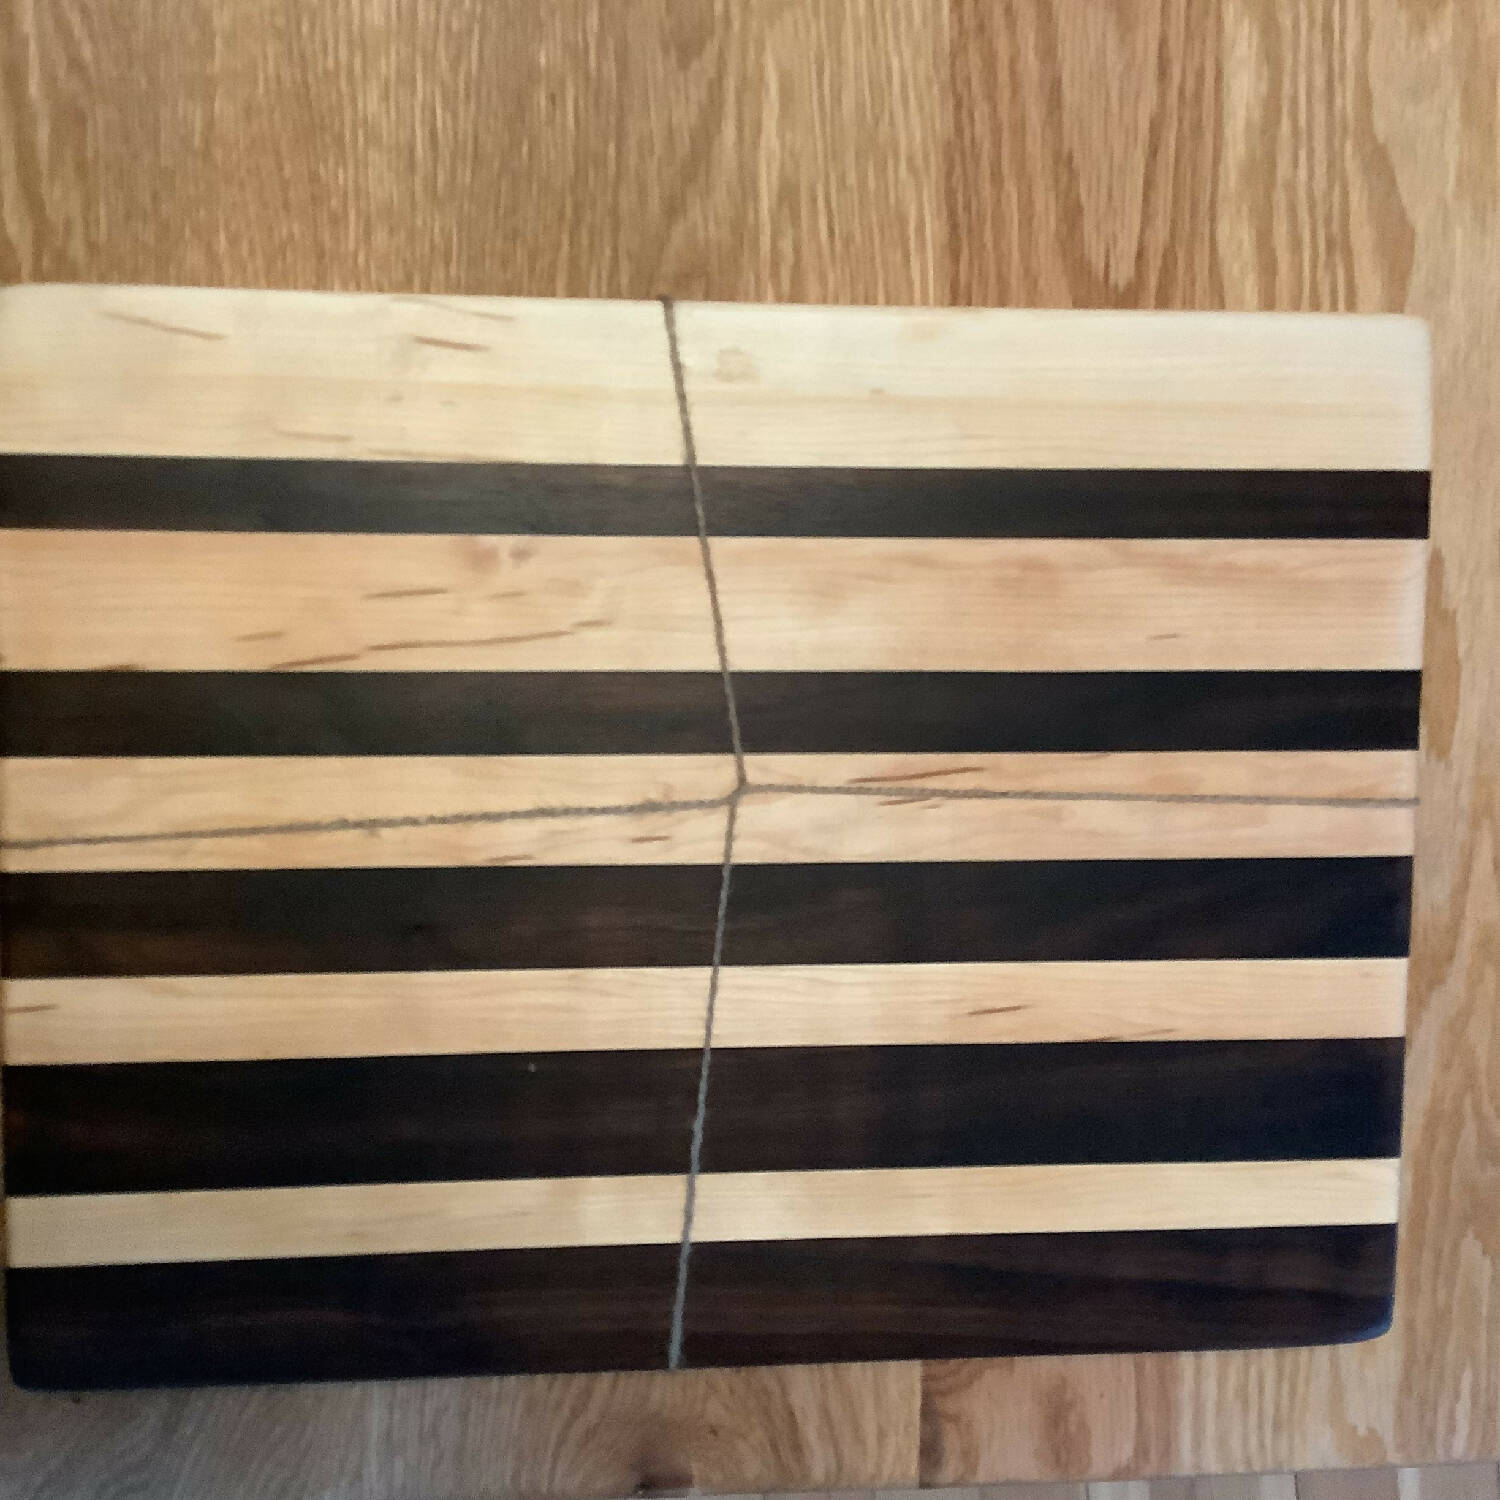 12” x 12” maple and walnut cutting board in gradient pattern